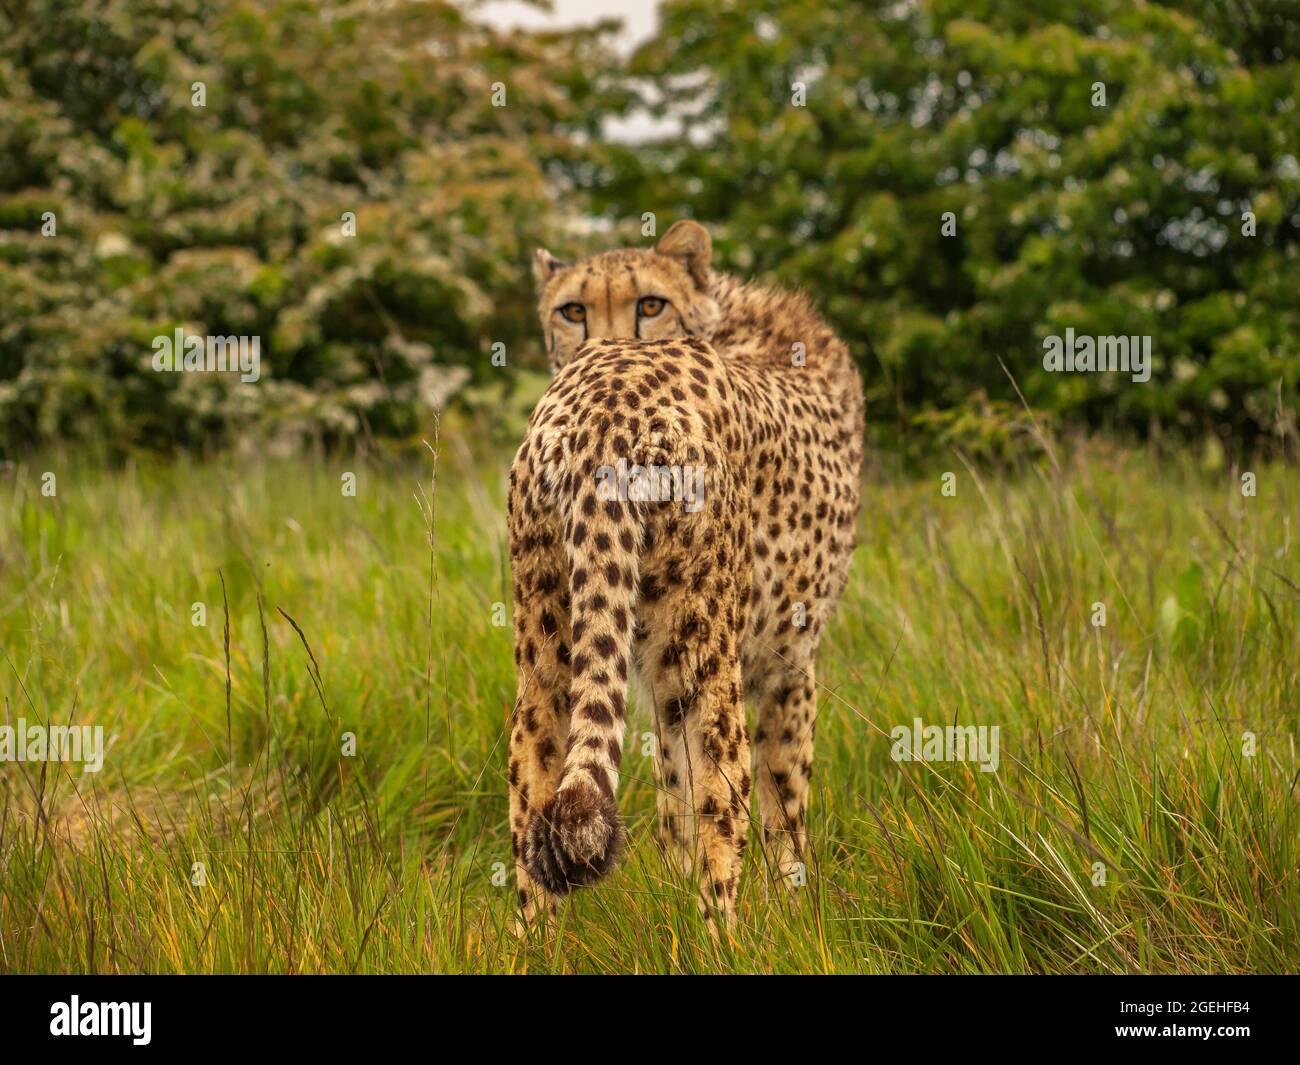 Cheetah (Acinonyx jubatus) in long grass looking at the camera. Stock Photo